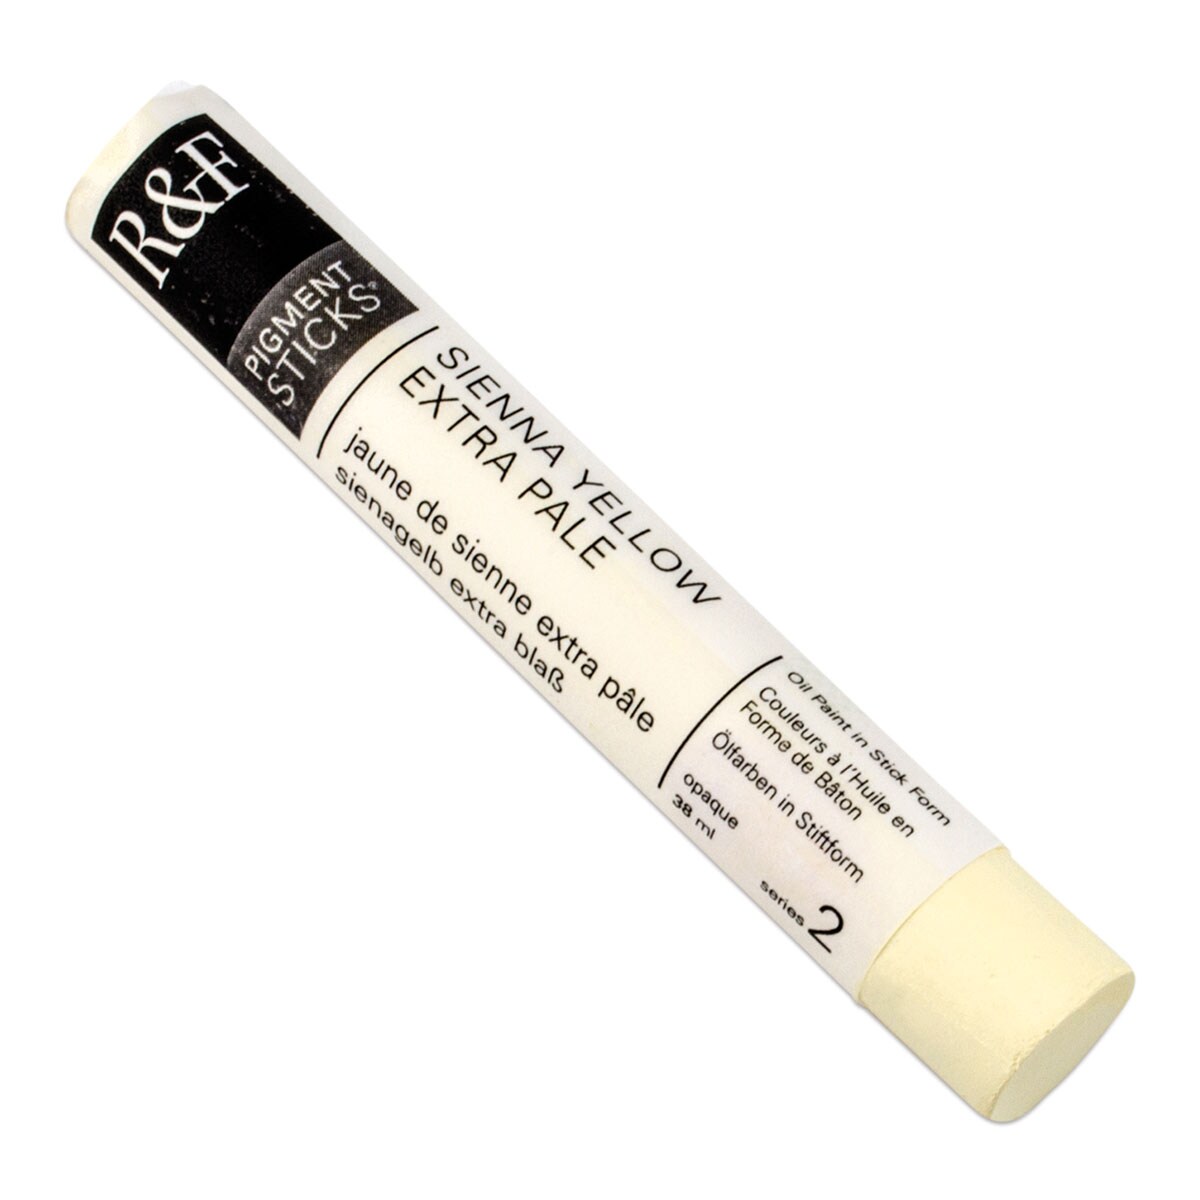 R&#x26;F Pigment Stick - Sienna Yellow Extra Pale, 38 ml